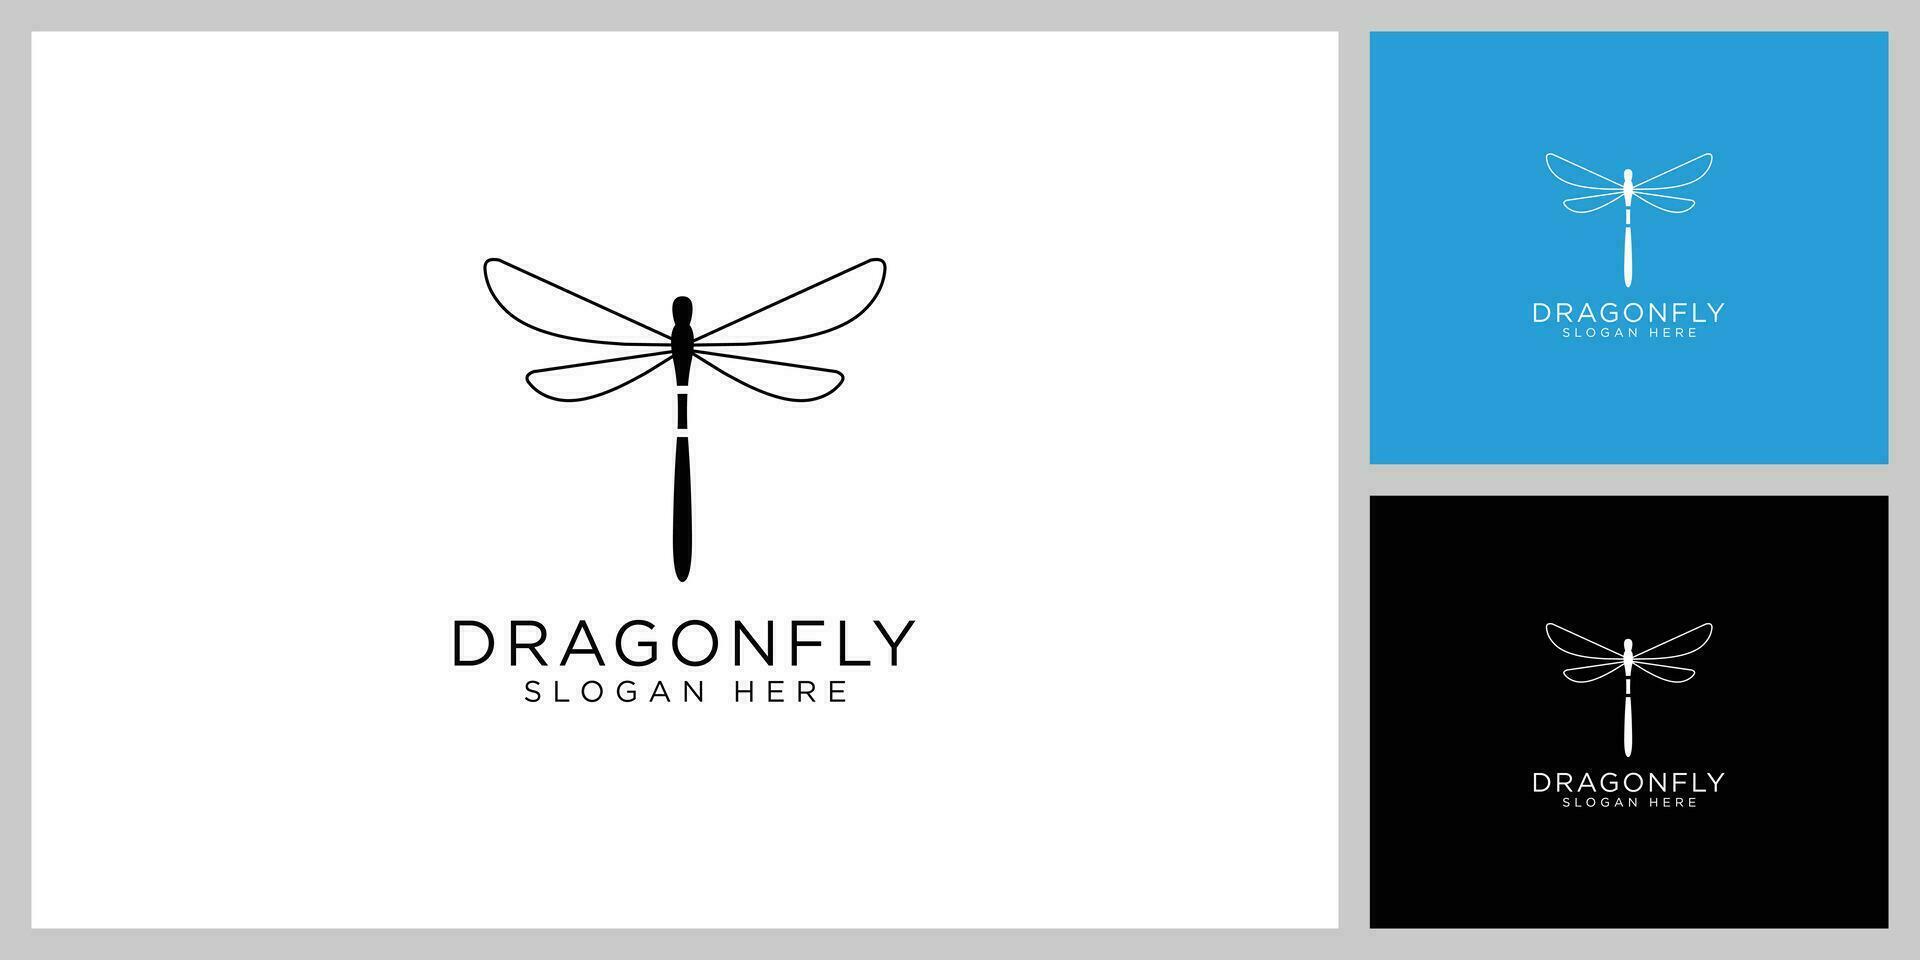 dragonfly logo vector design line style